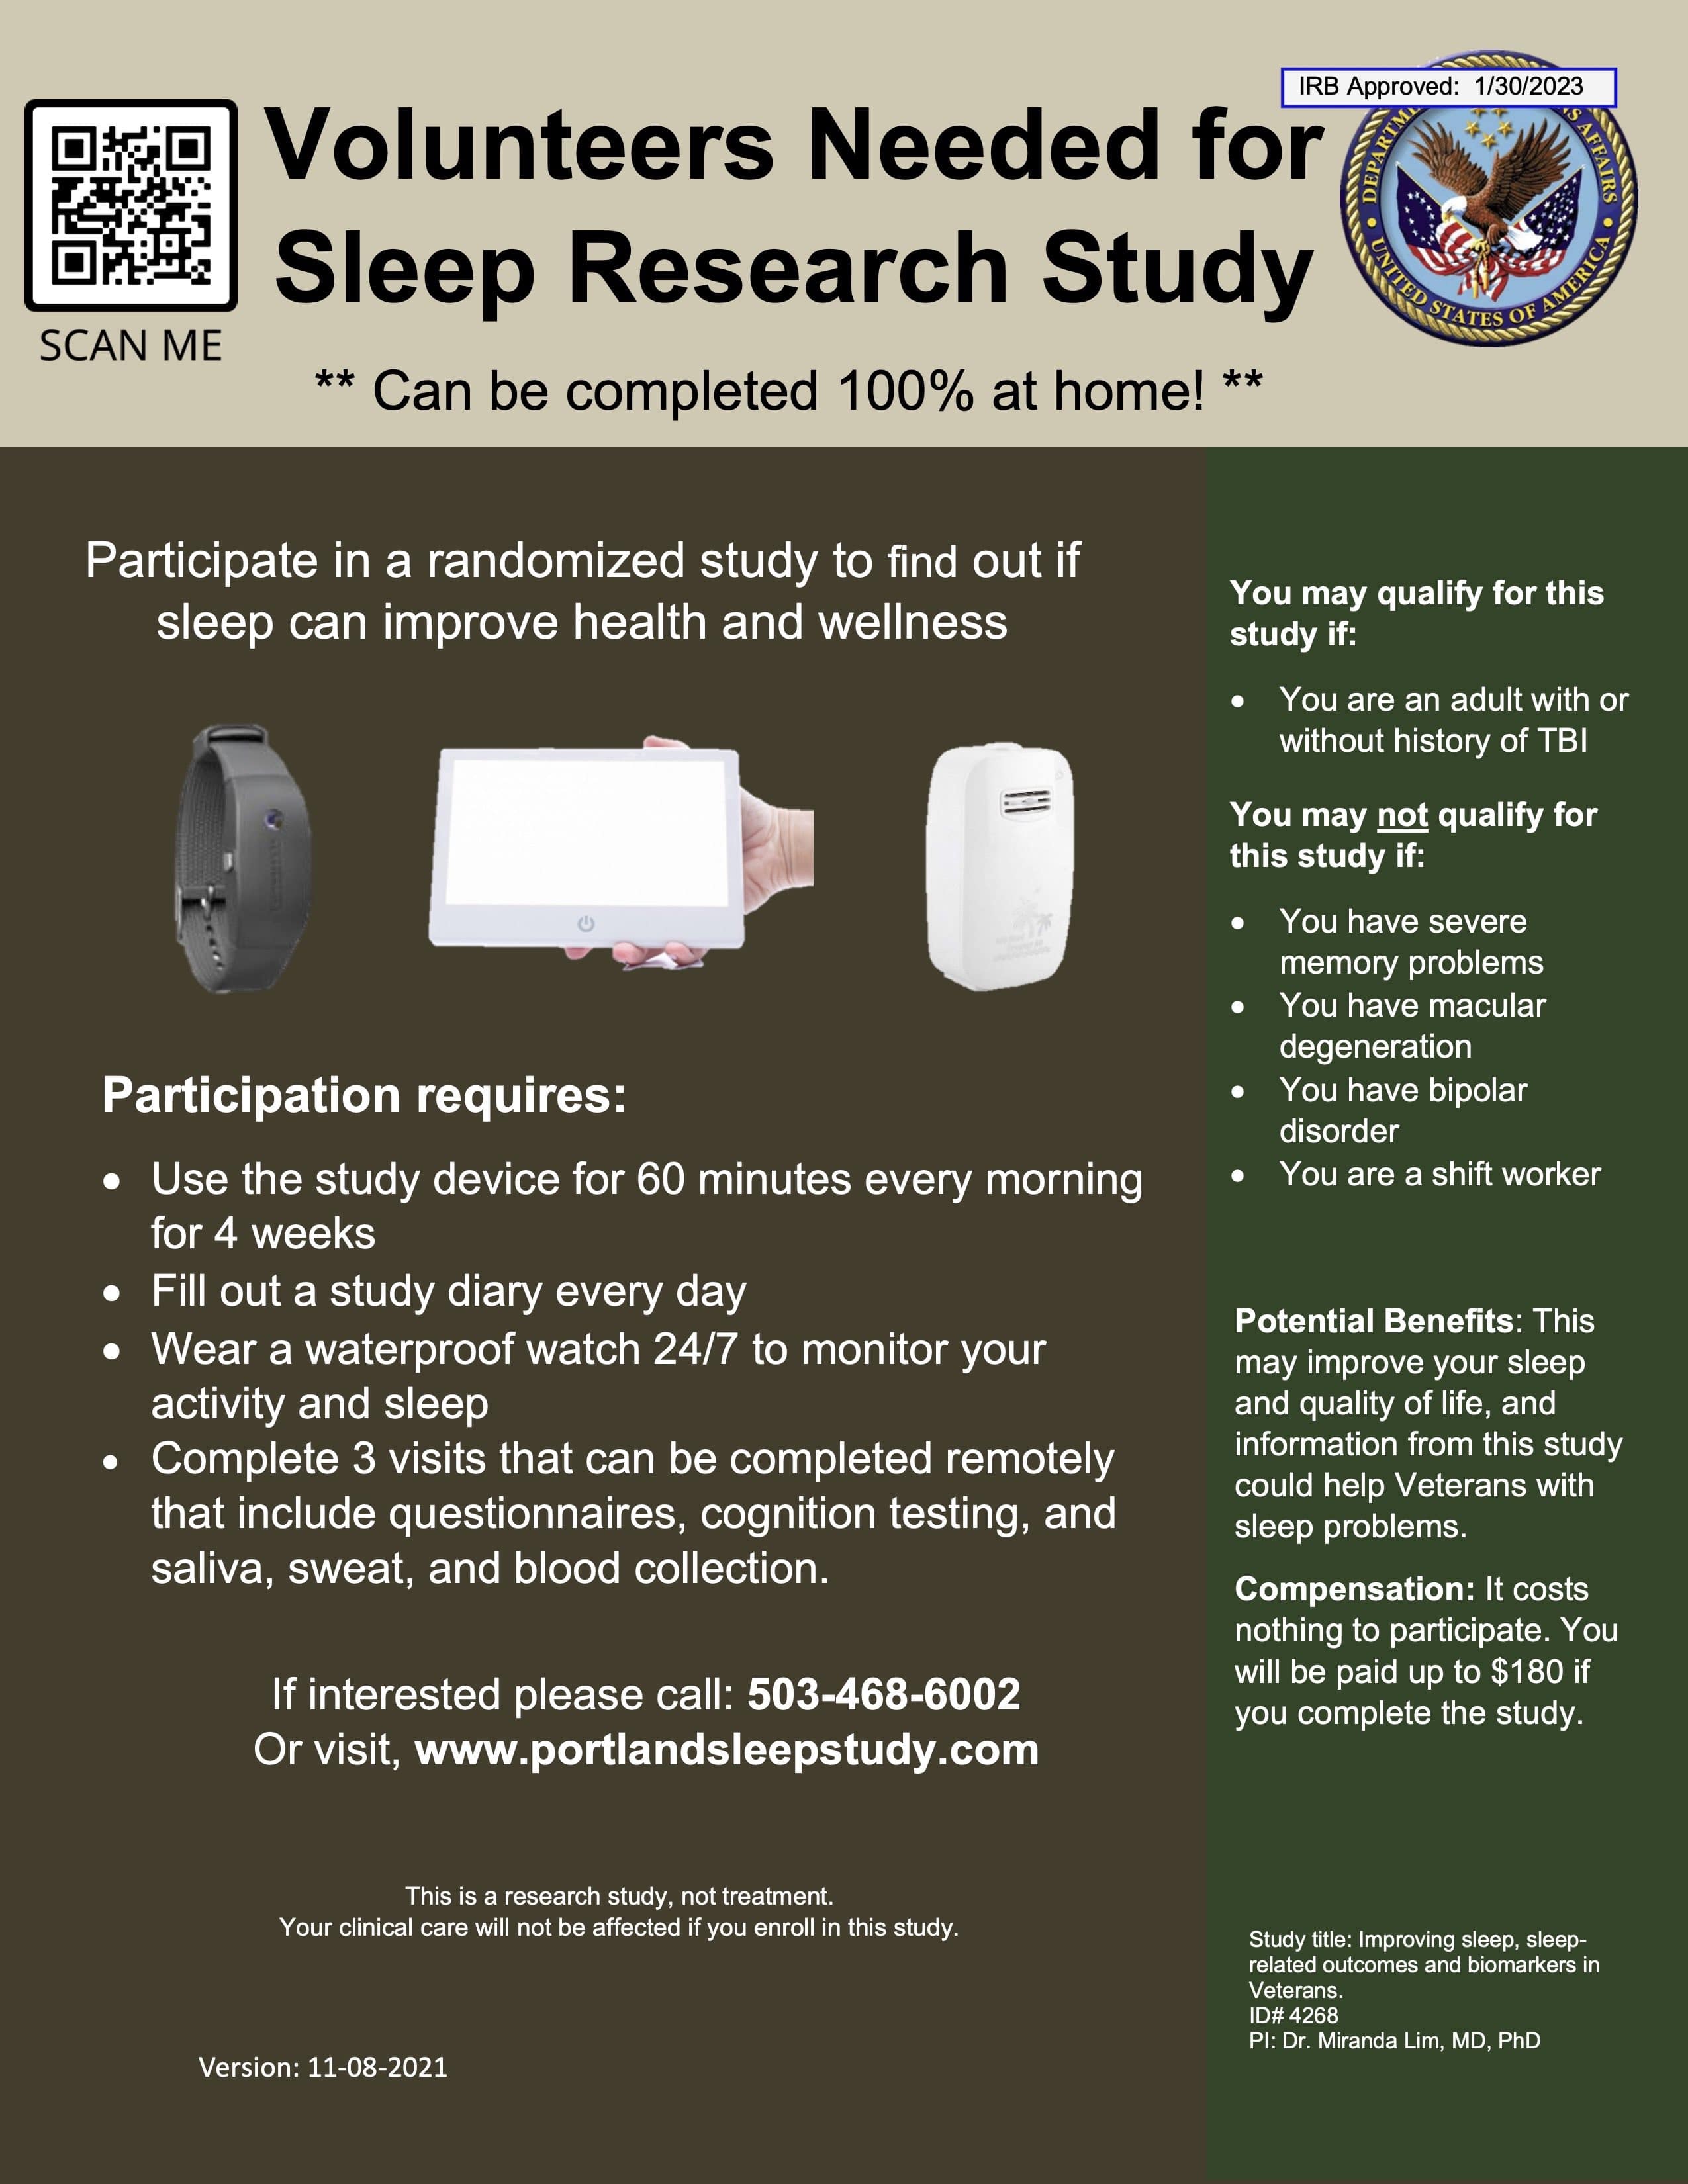 Sleep study recruitment flyer for Sleep & Wellness Study